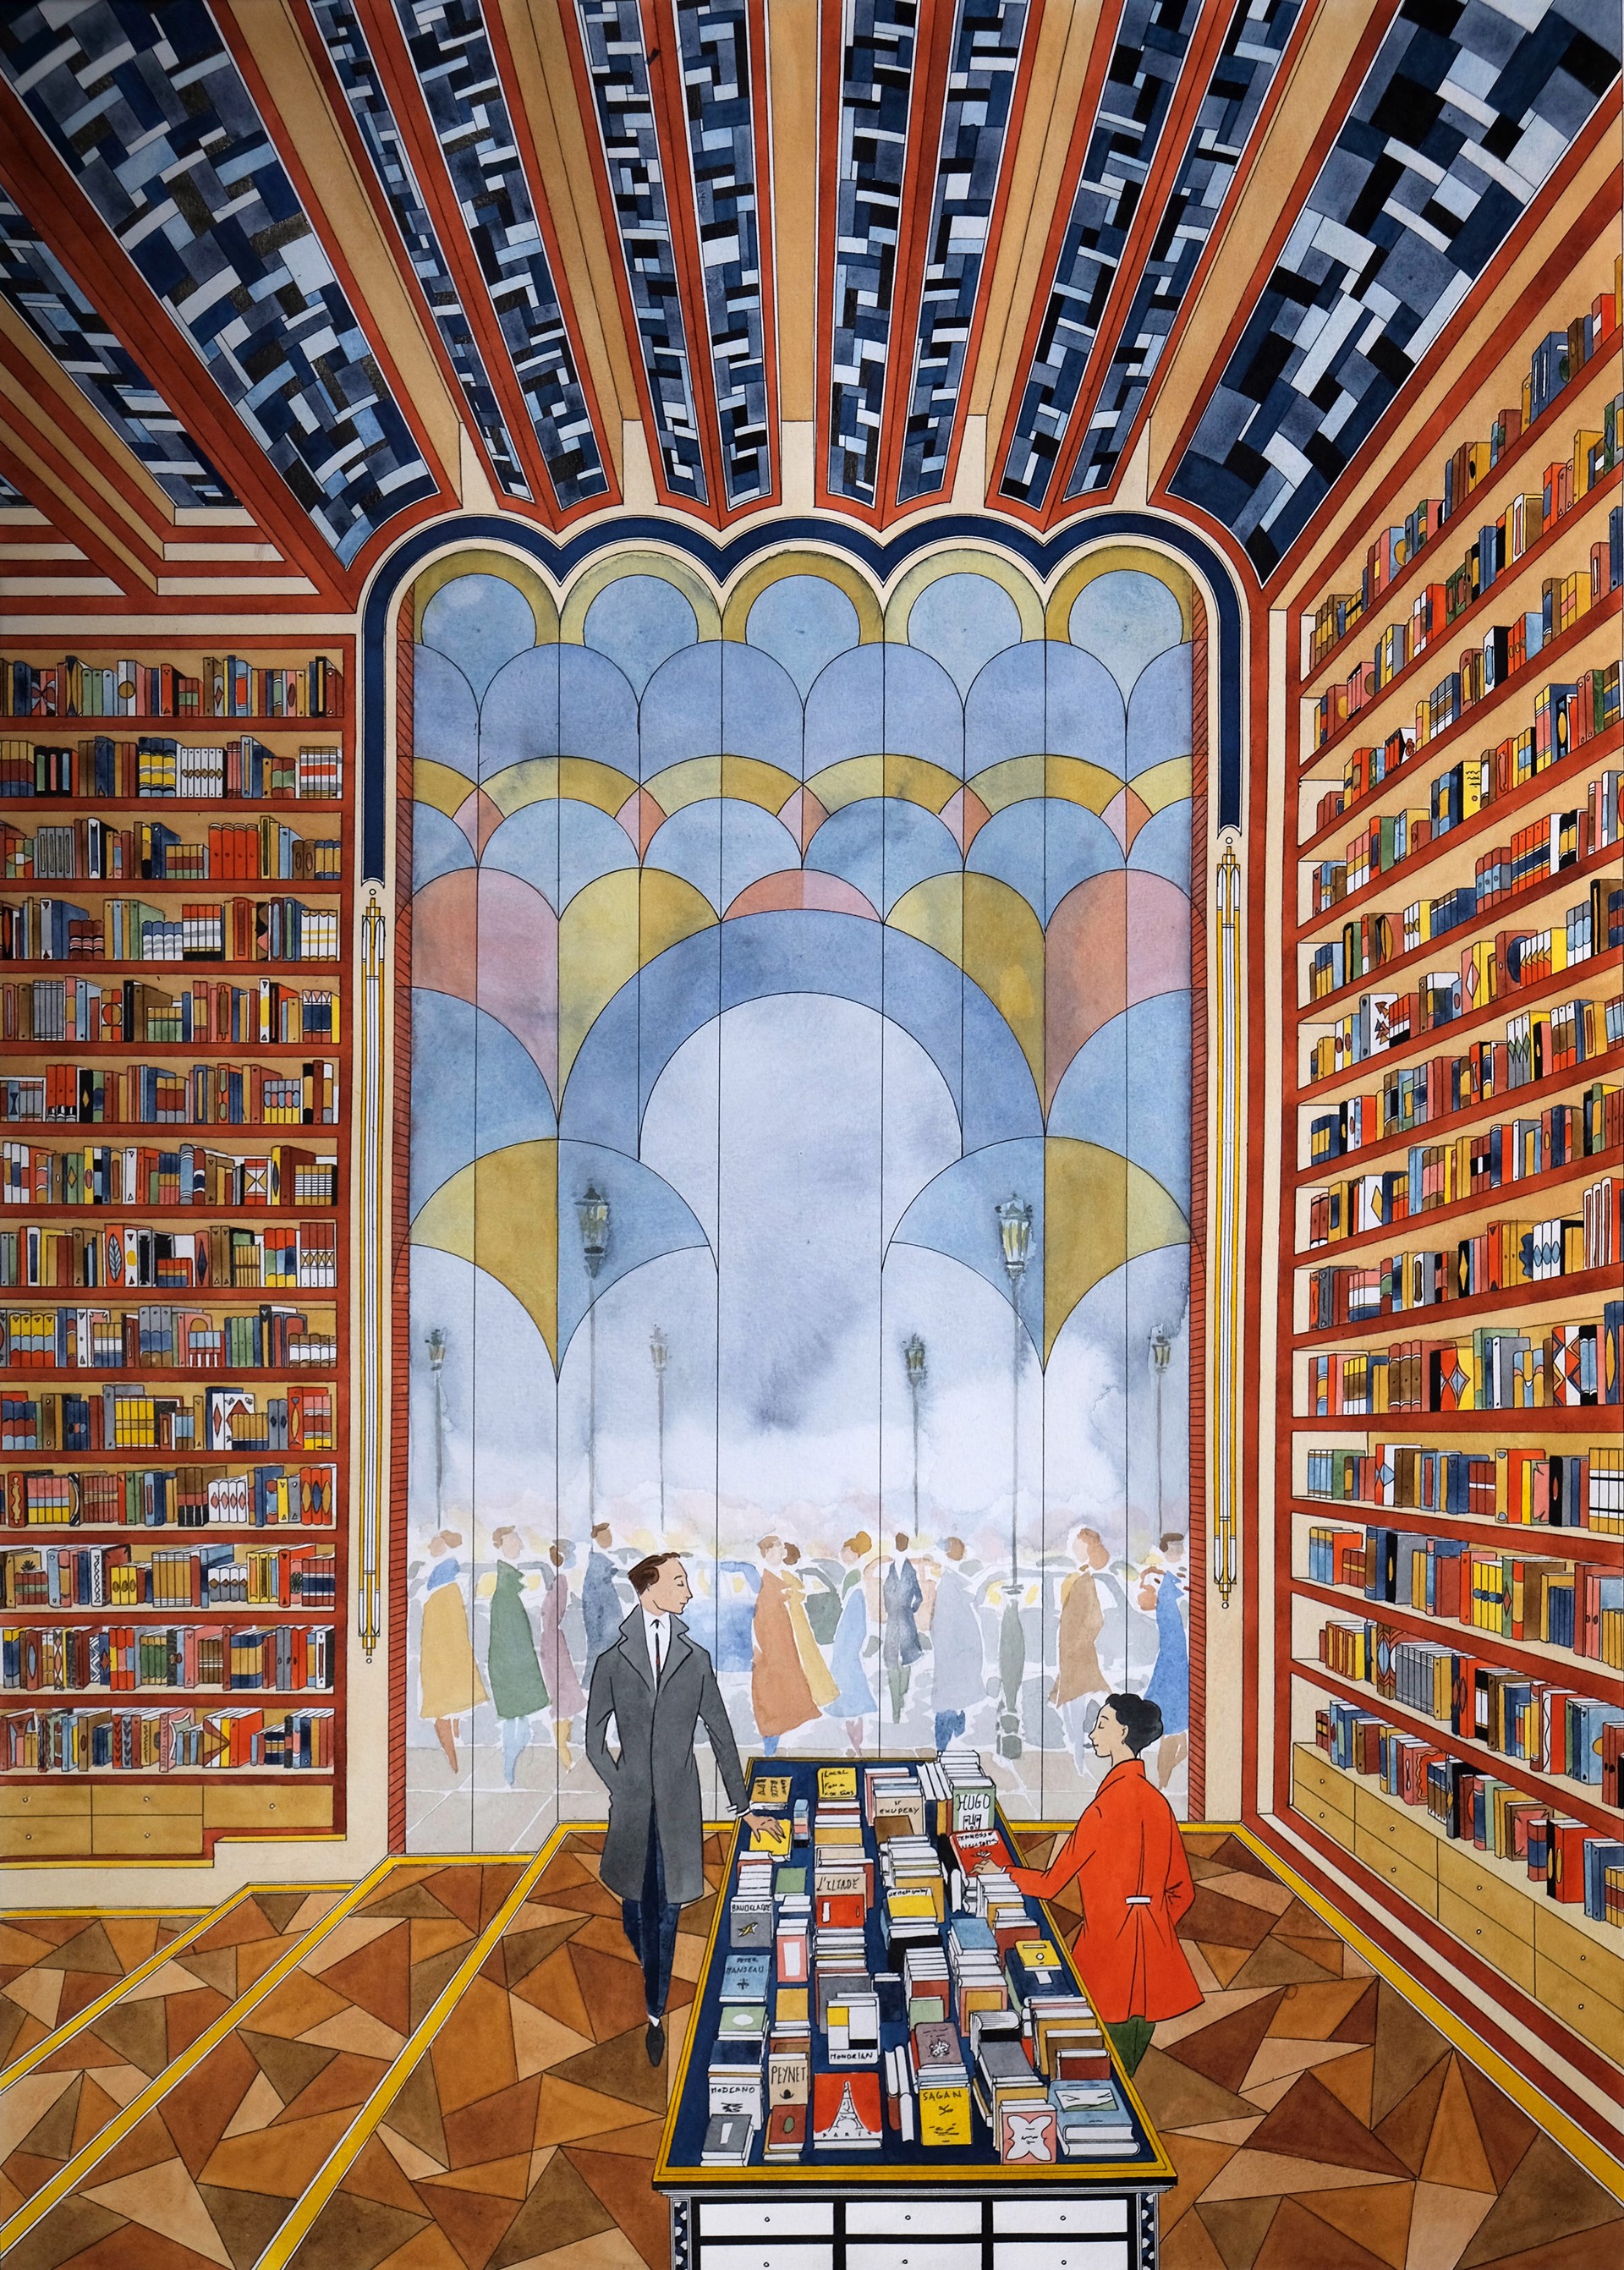 La Librairie by Alexis Bruchon